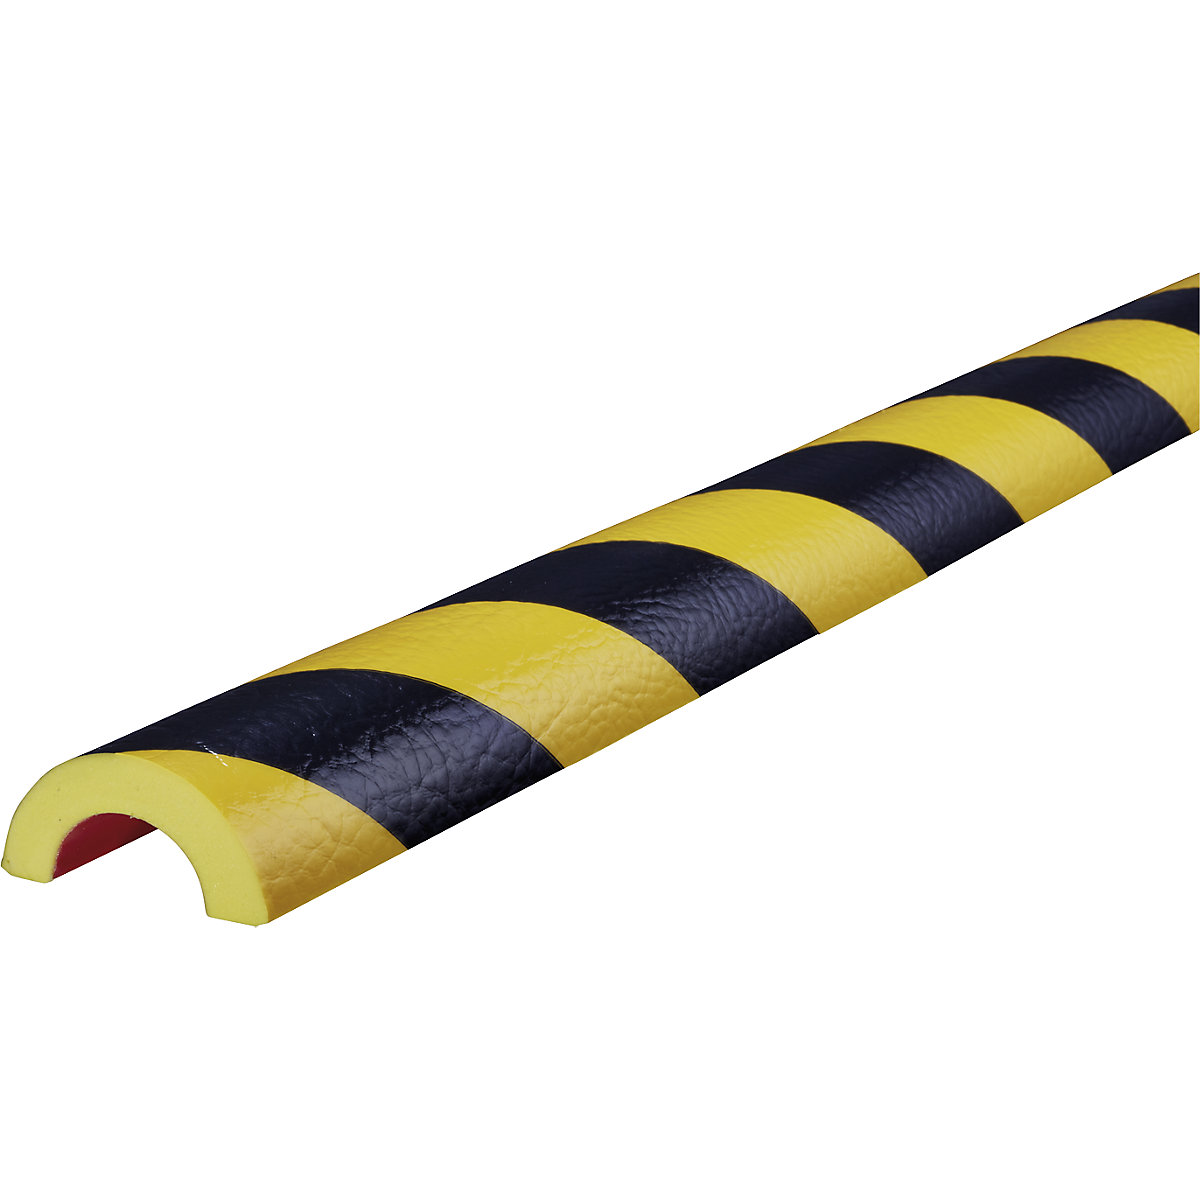 Proteção de tubos Knuffi® – SHG, tipo R30, corte individual, por metro corrente, preto/amarelo-11